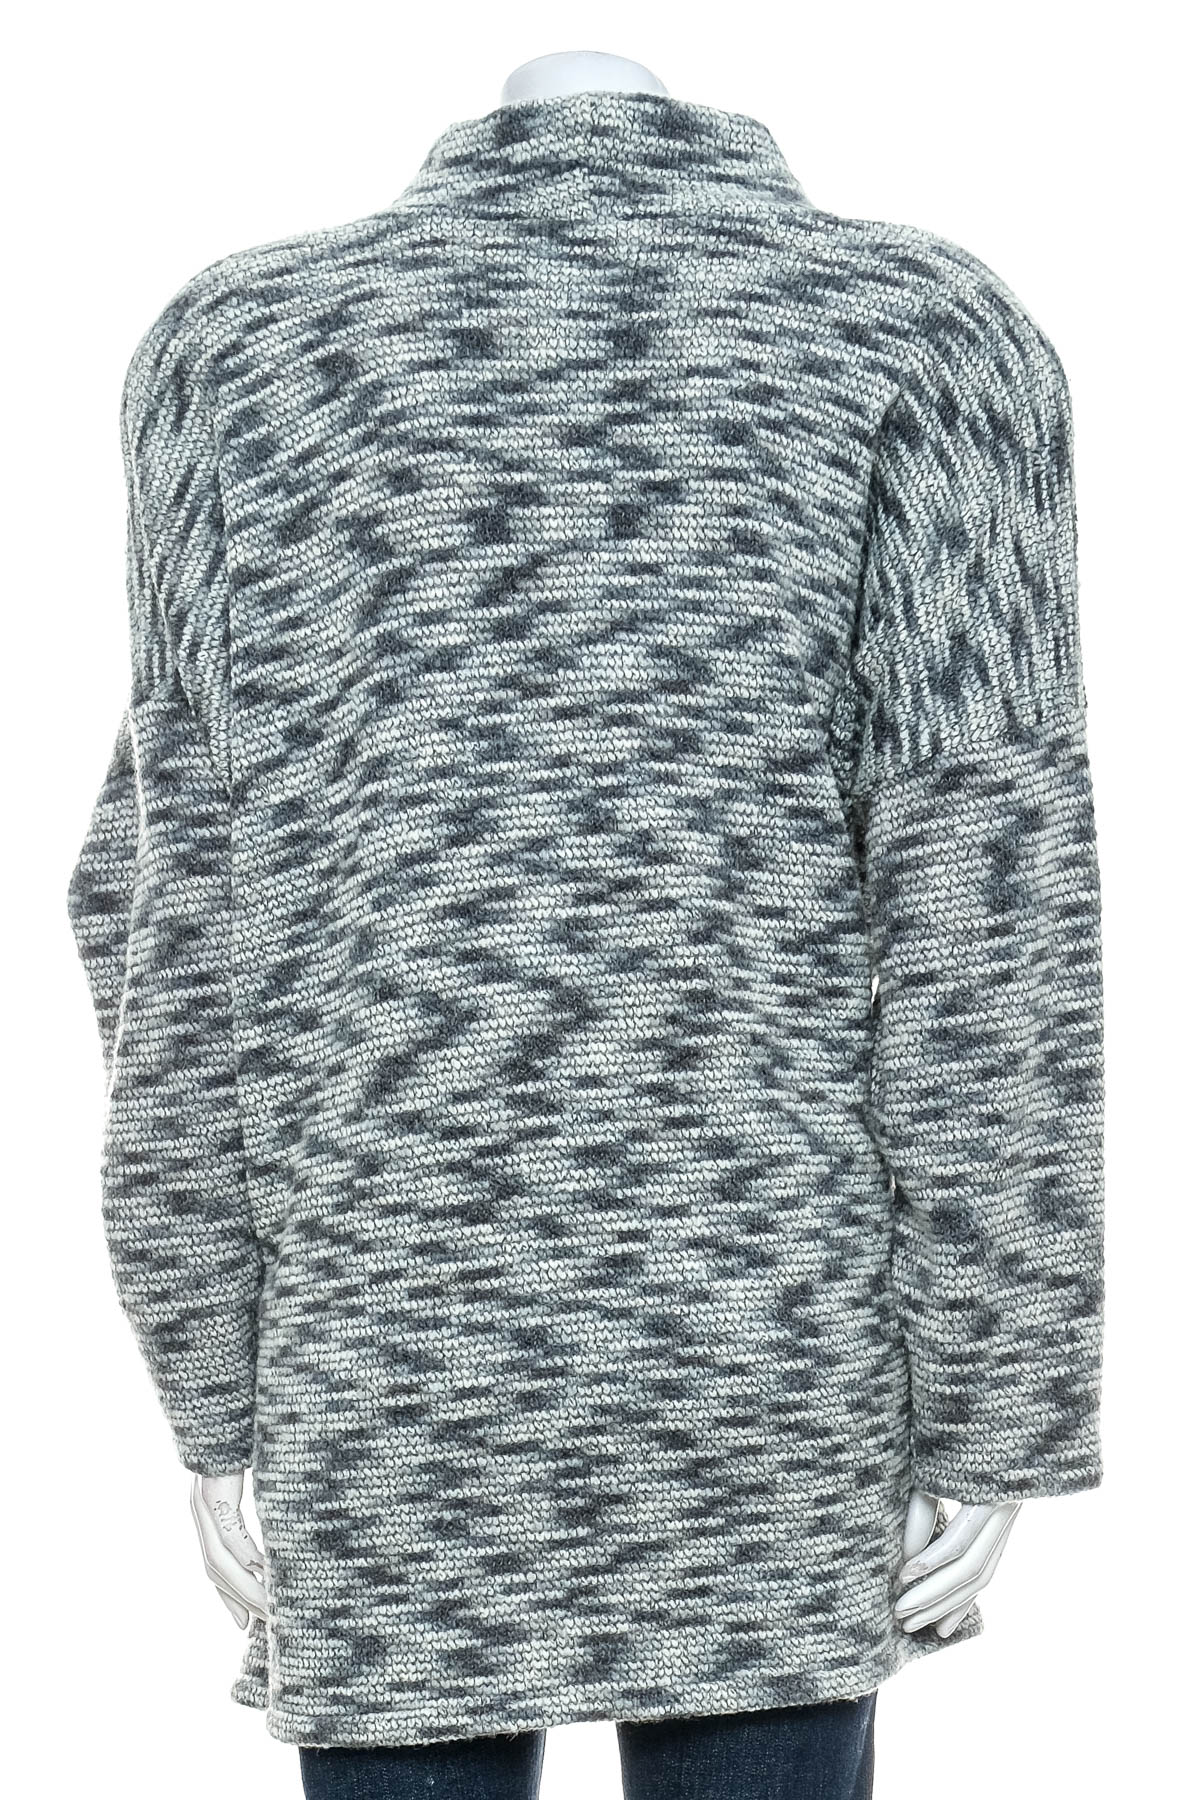 Women's sweater - InSein - 1